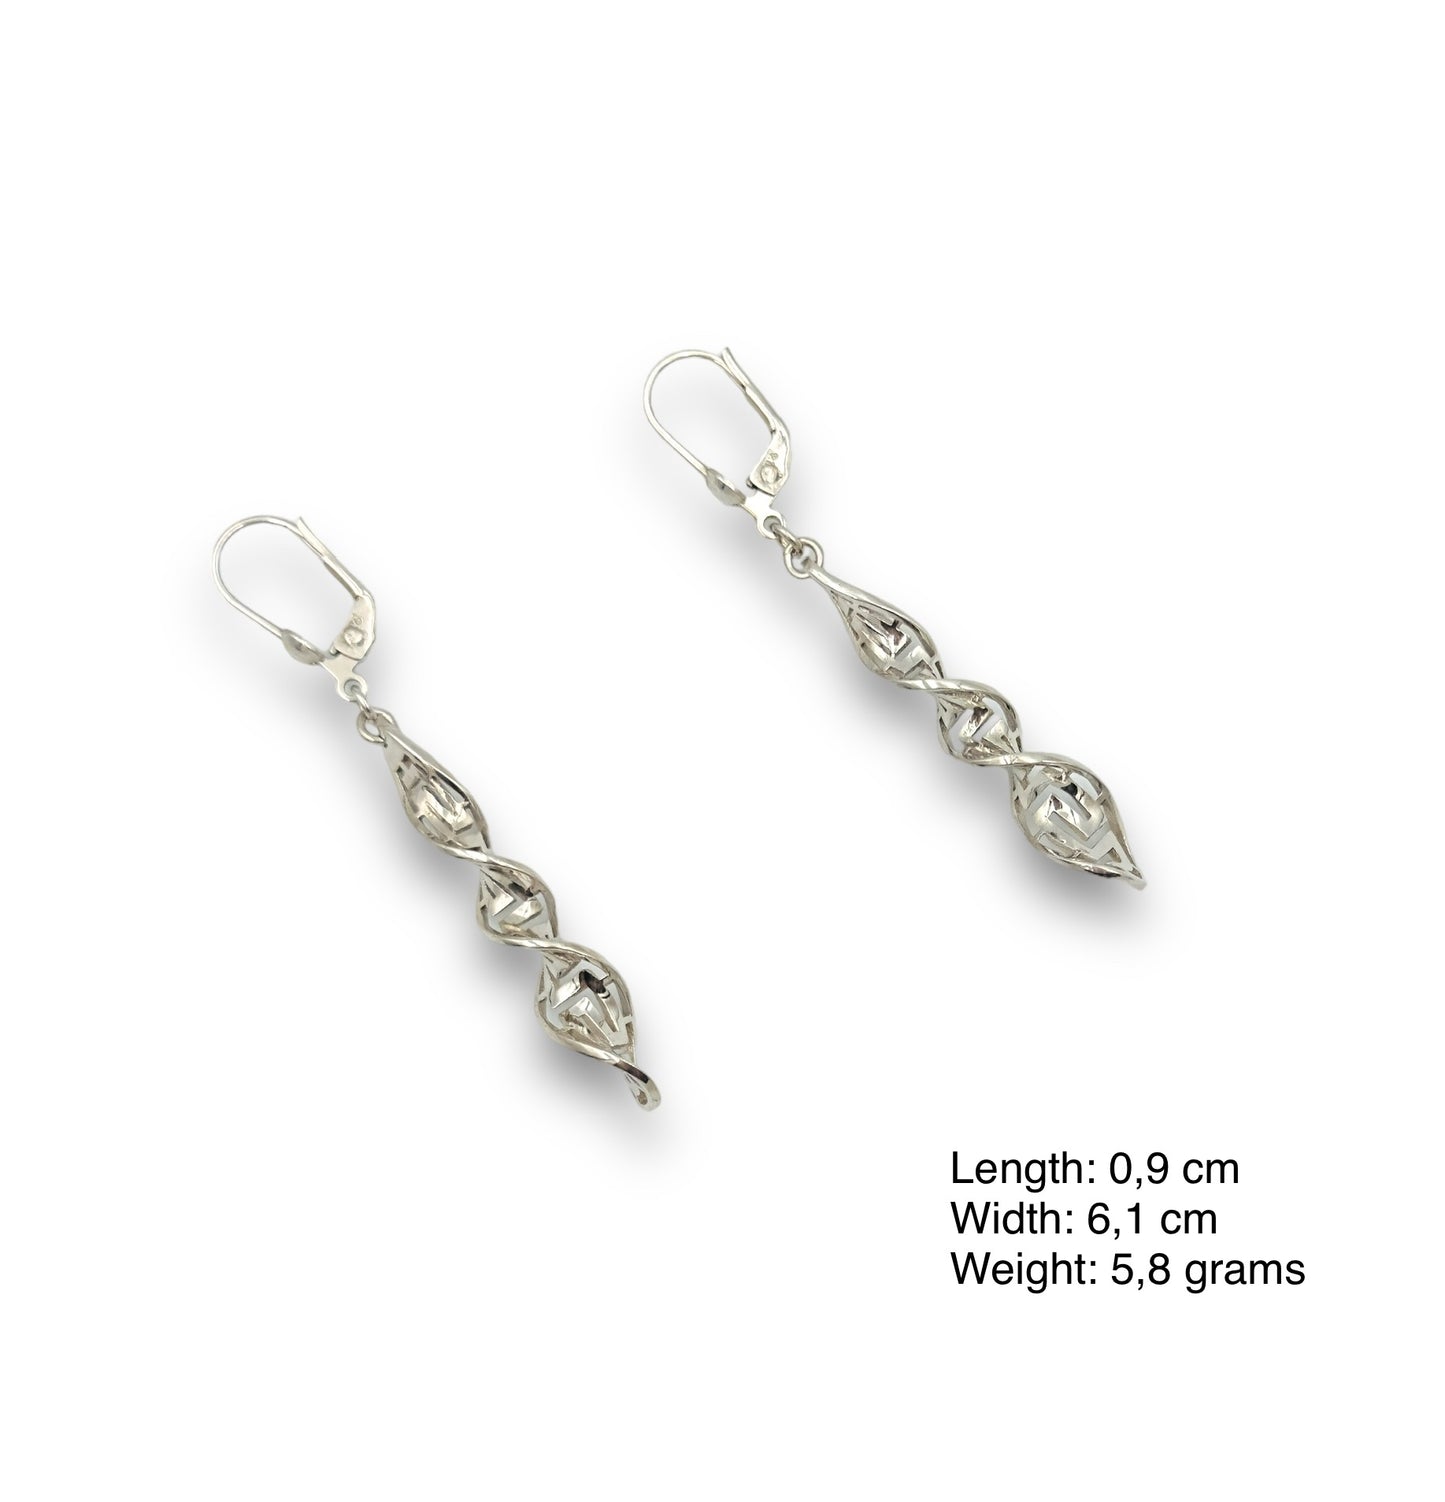 Silver twisted Meander design earrings